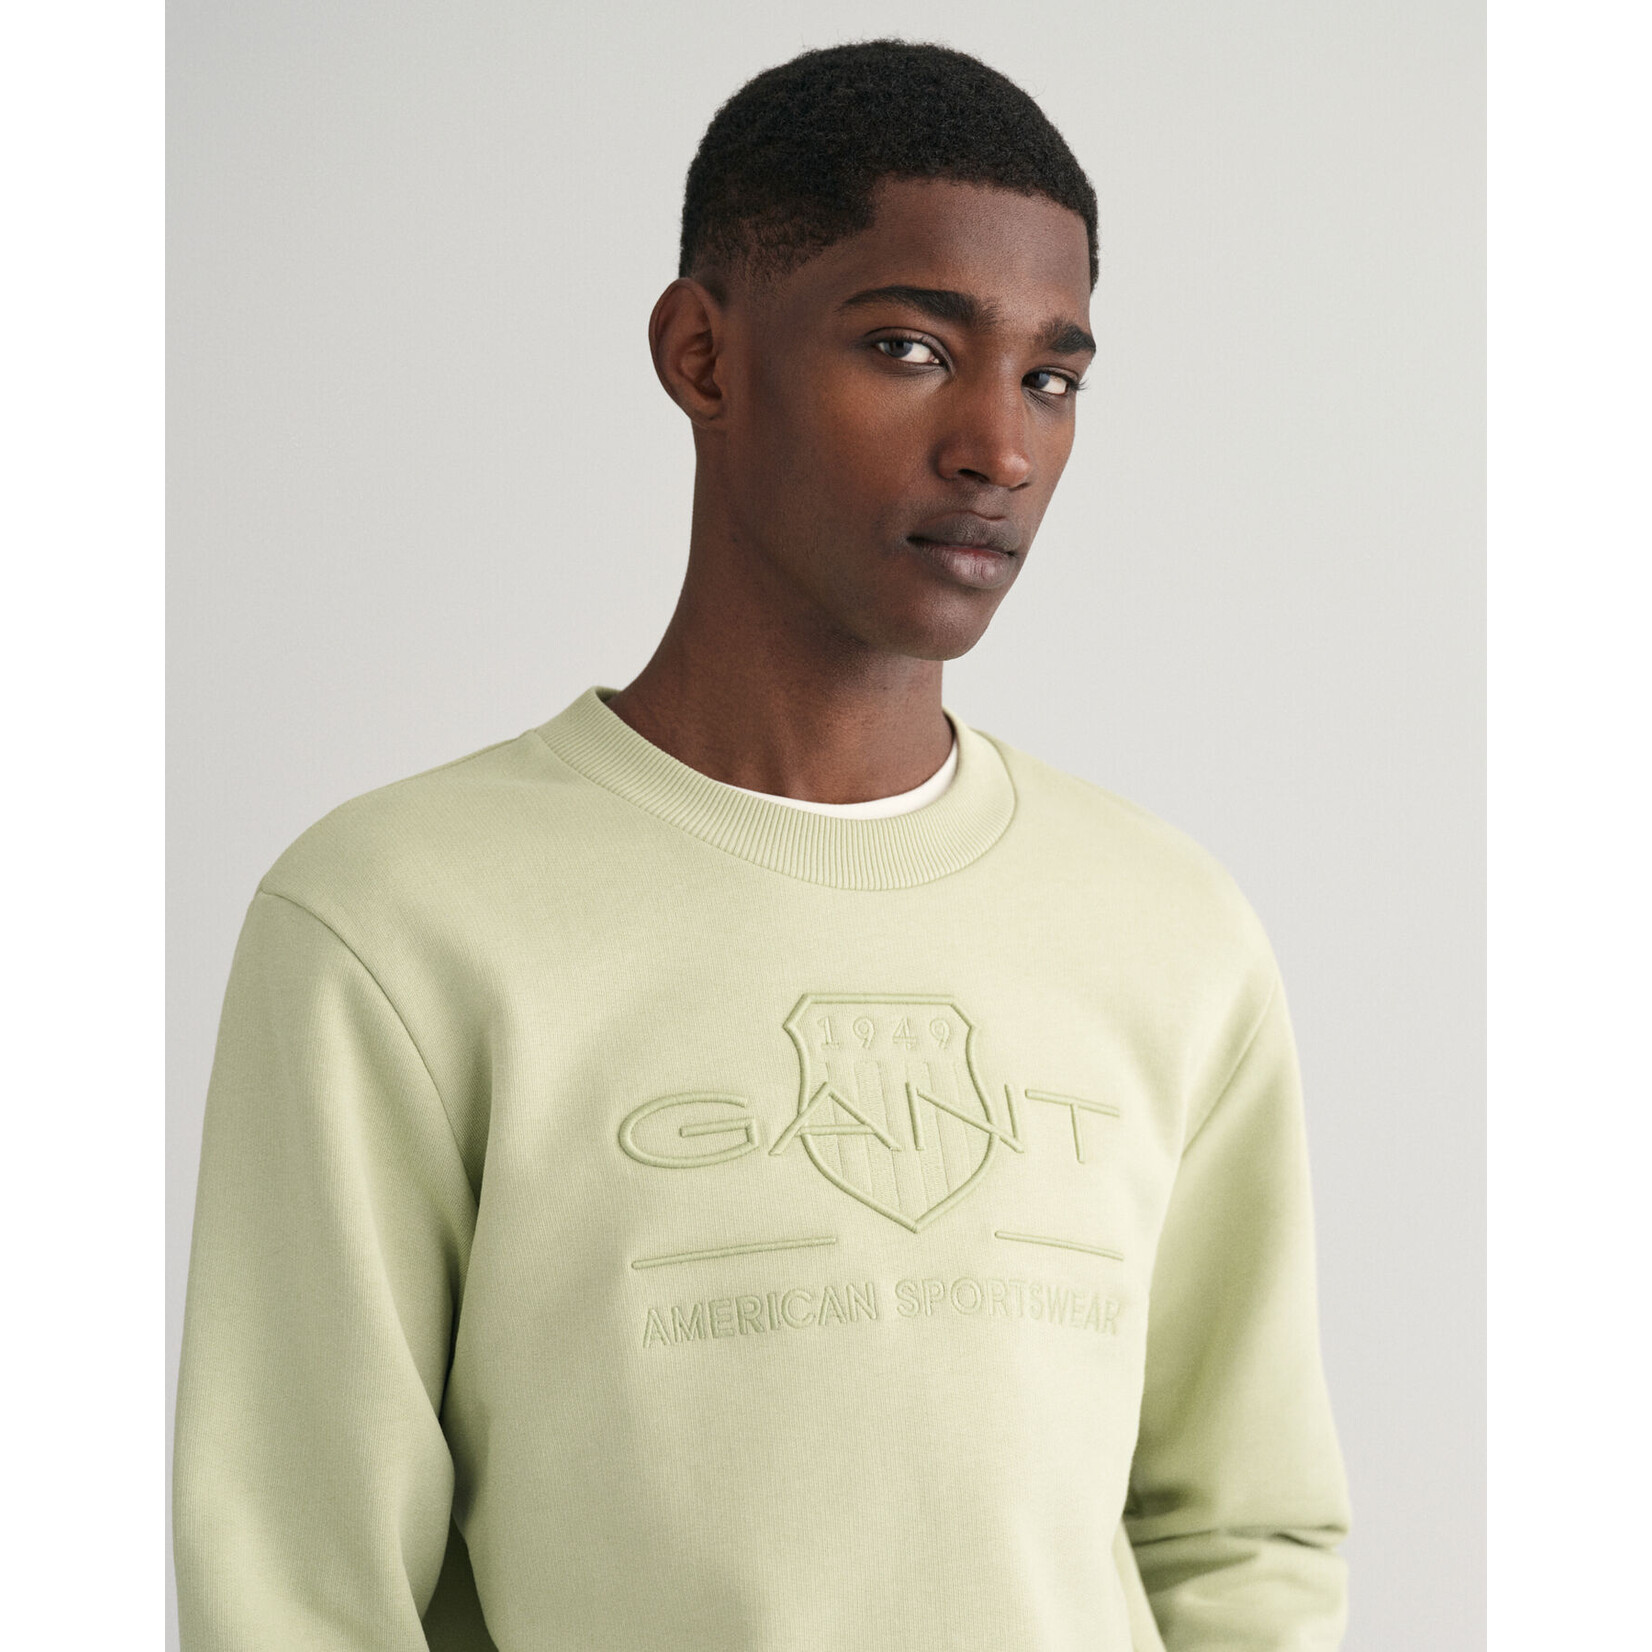 GANT tonal shield sweater matcha groen